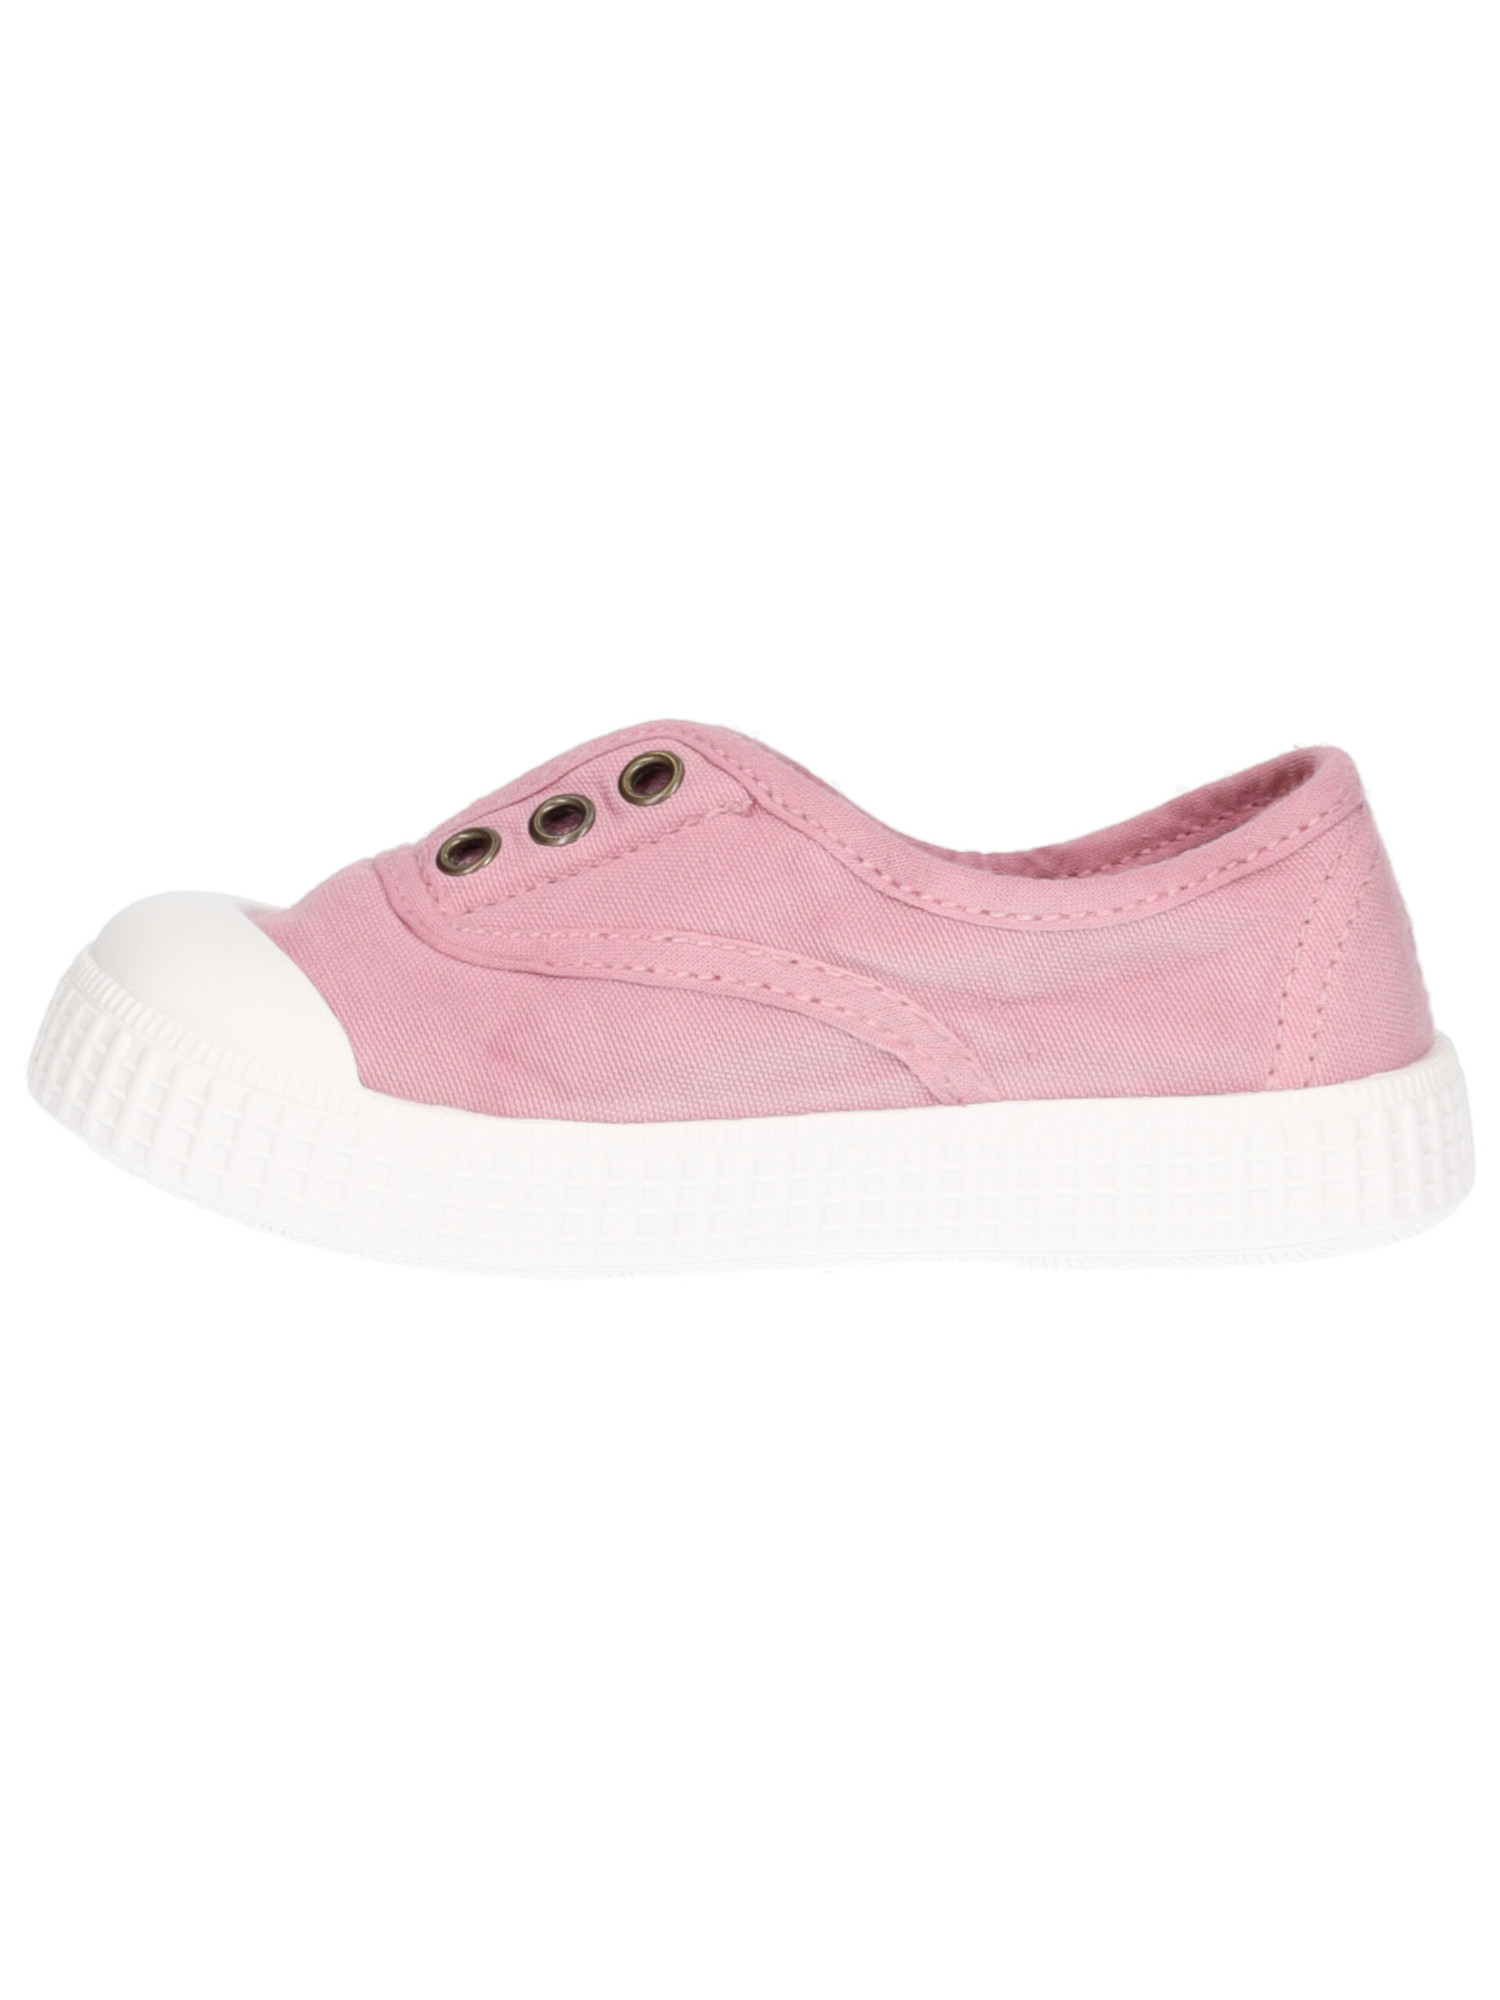 scarpa-igor-berri-da-bambina-rosa